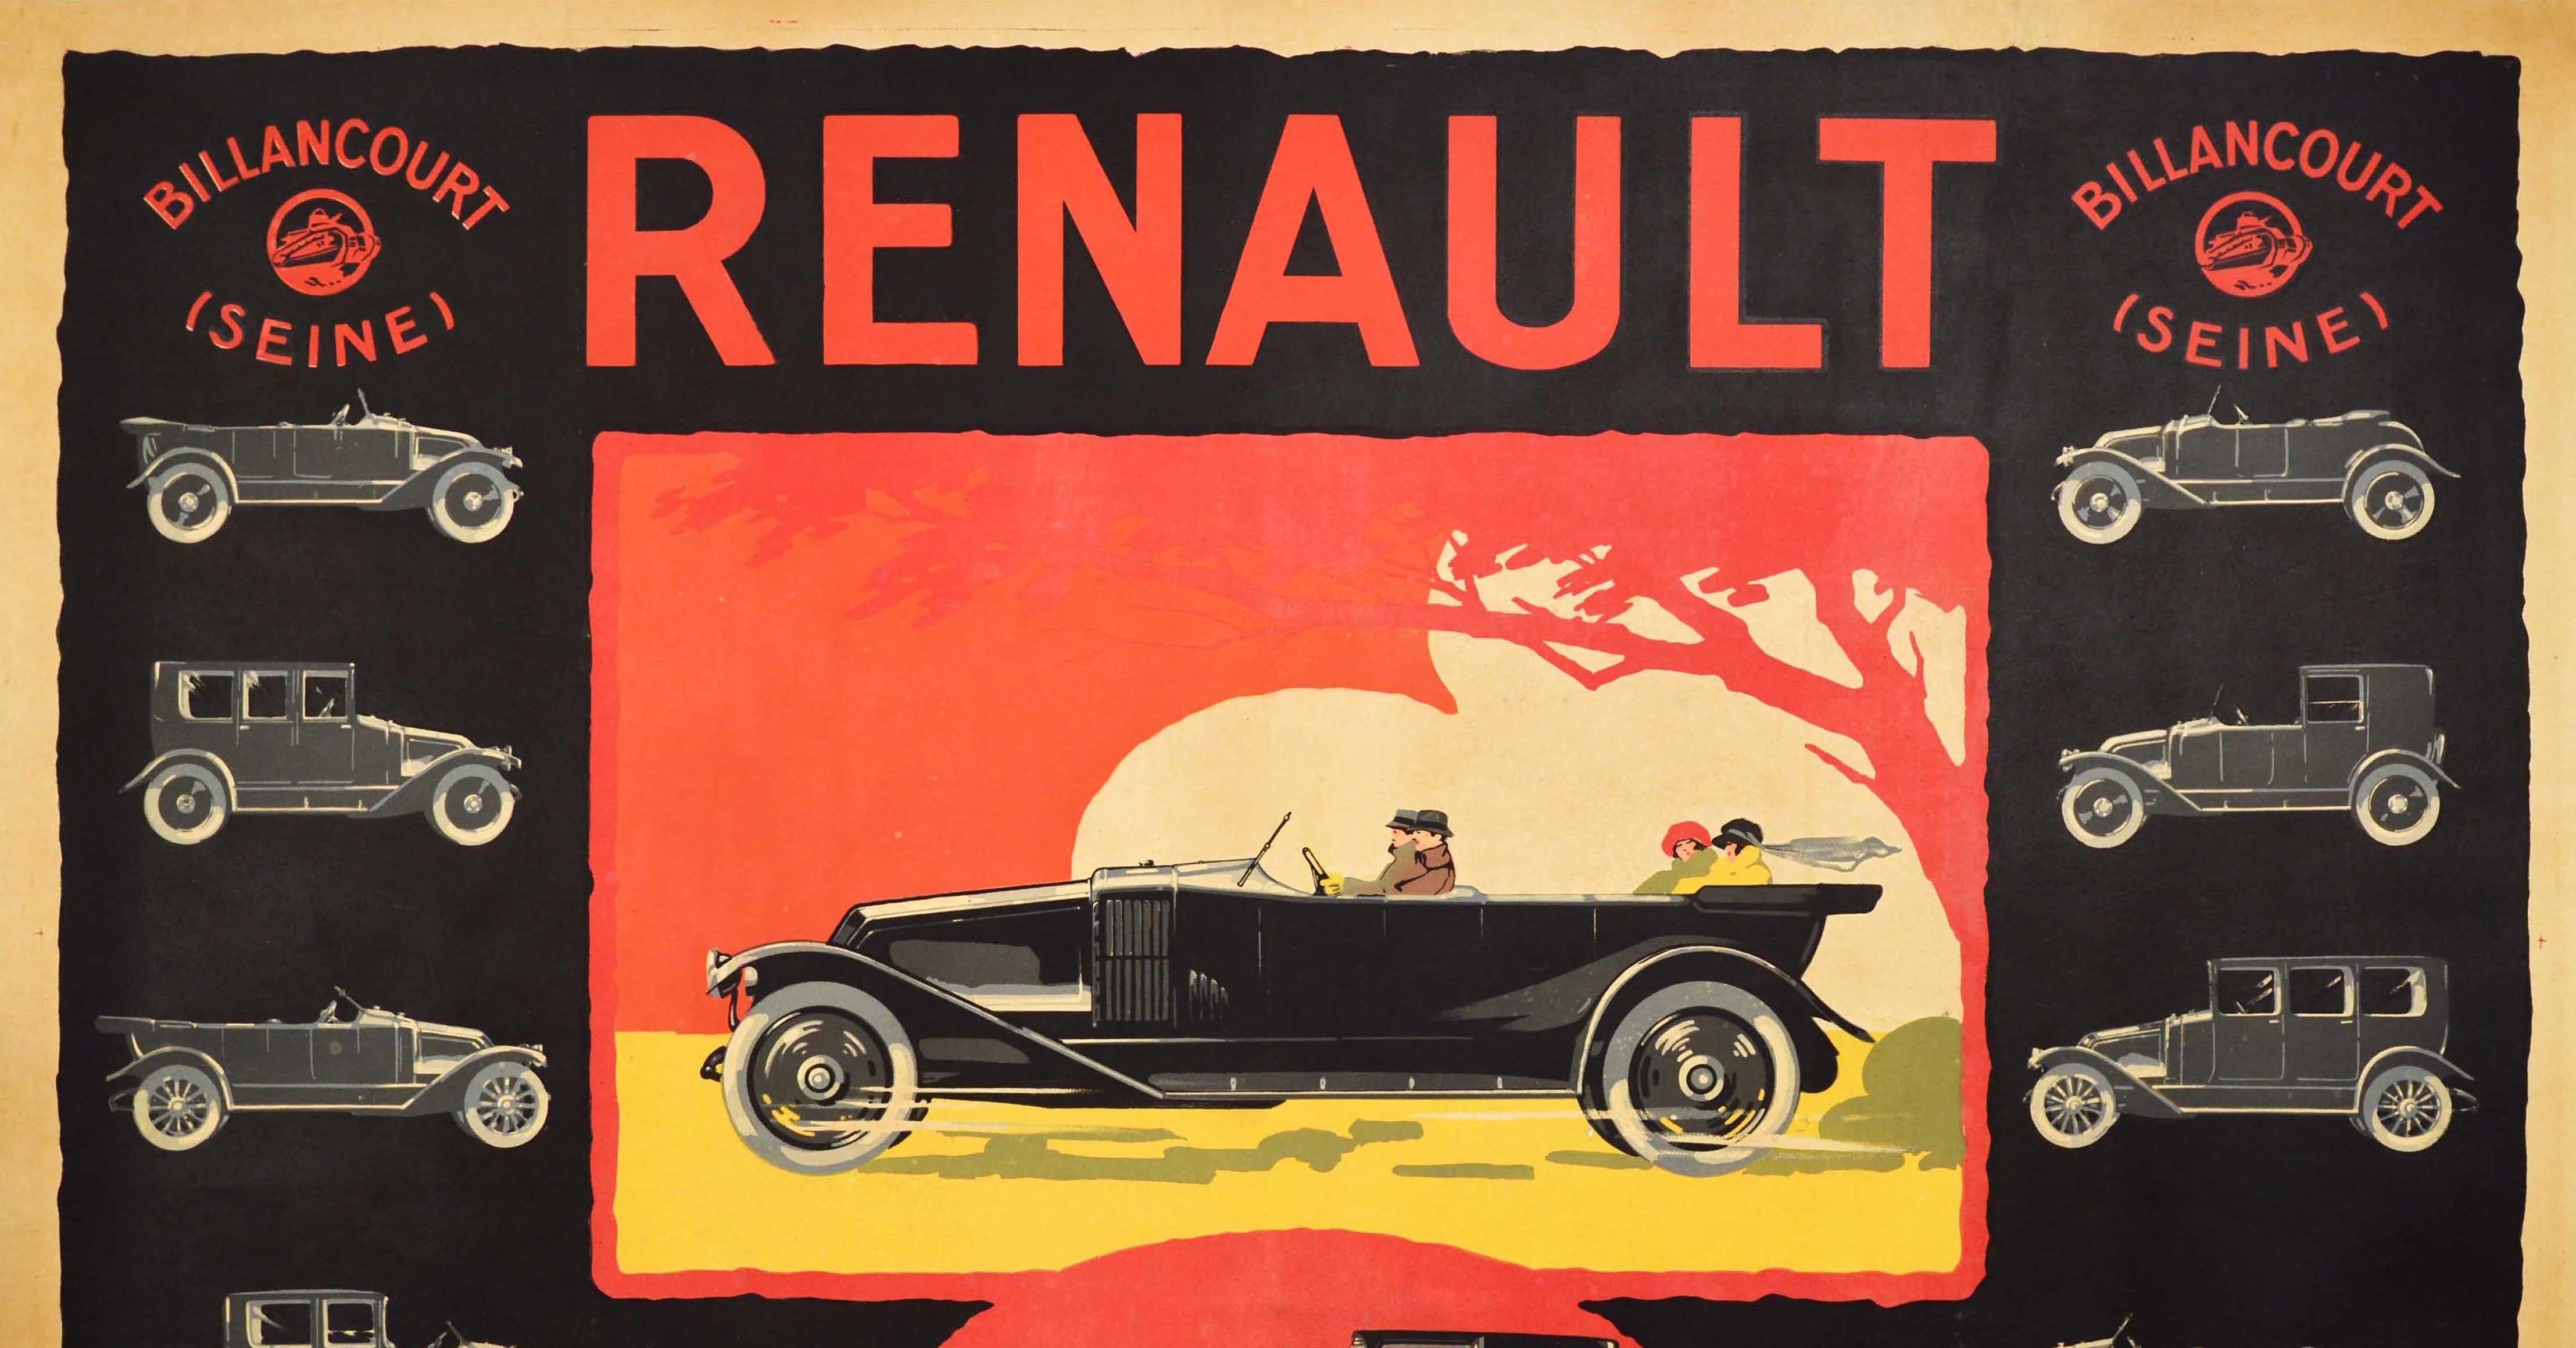 Original Antique Advertising Poster Renault Billancourt Seine Classic Car Models - Print by Unknown